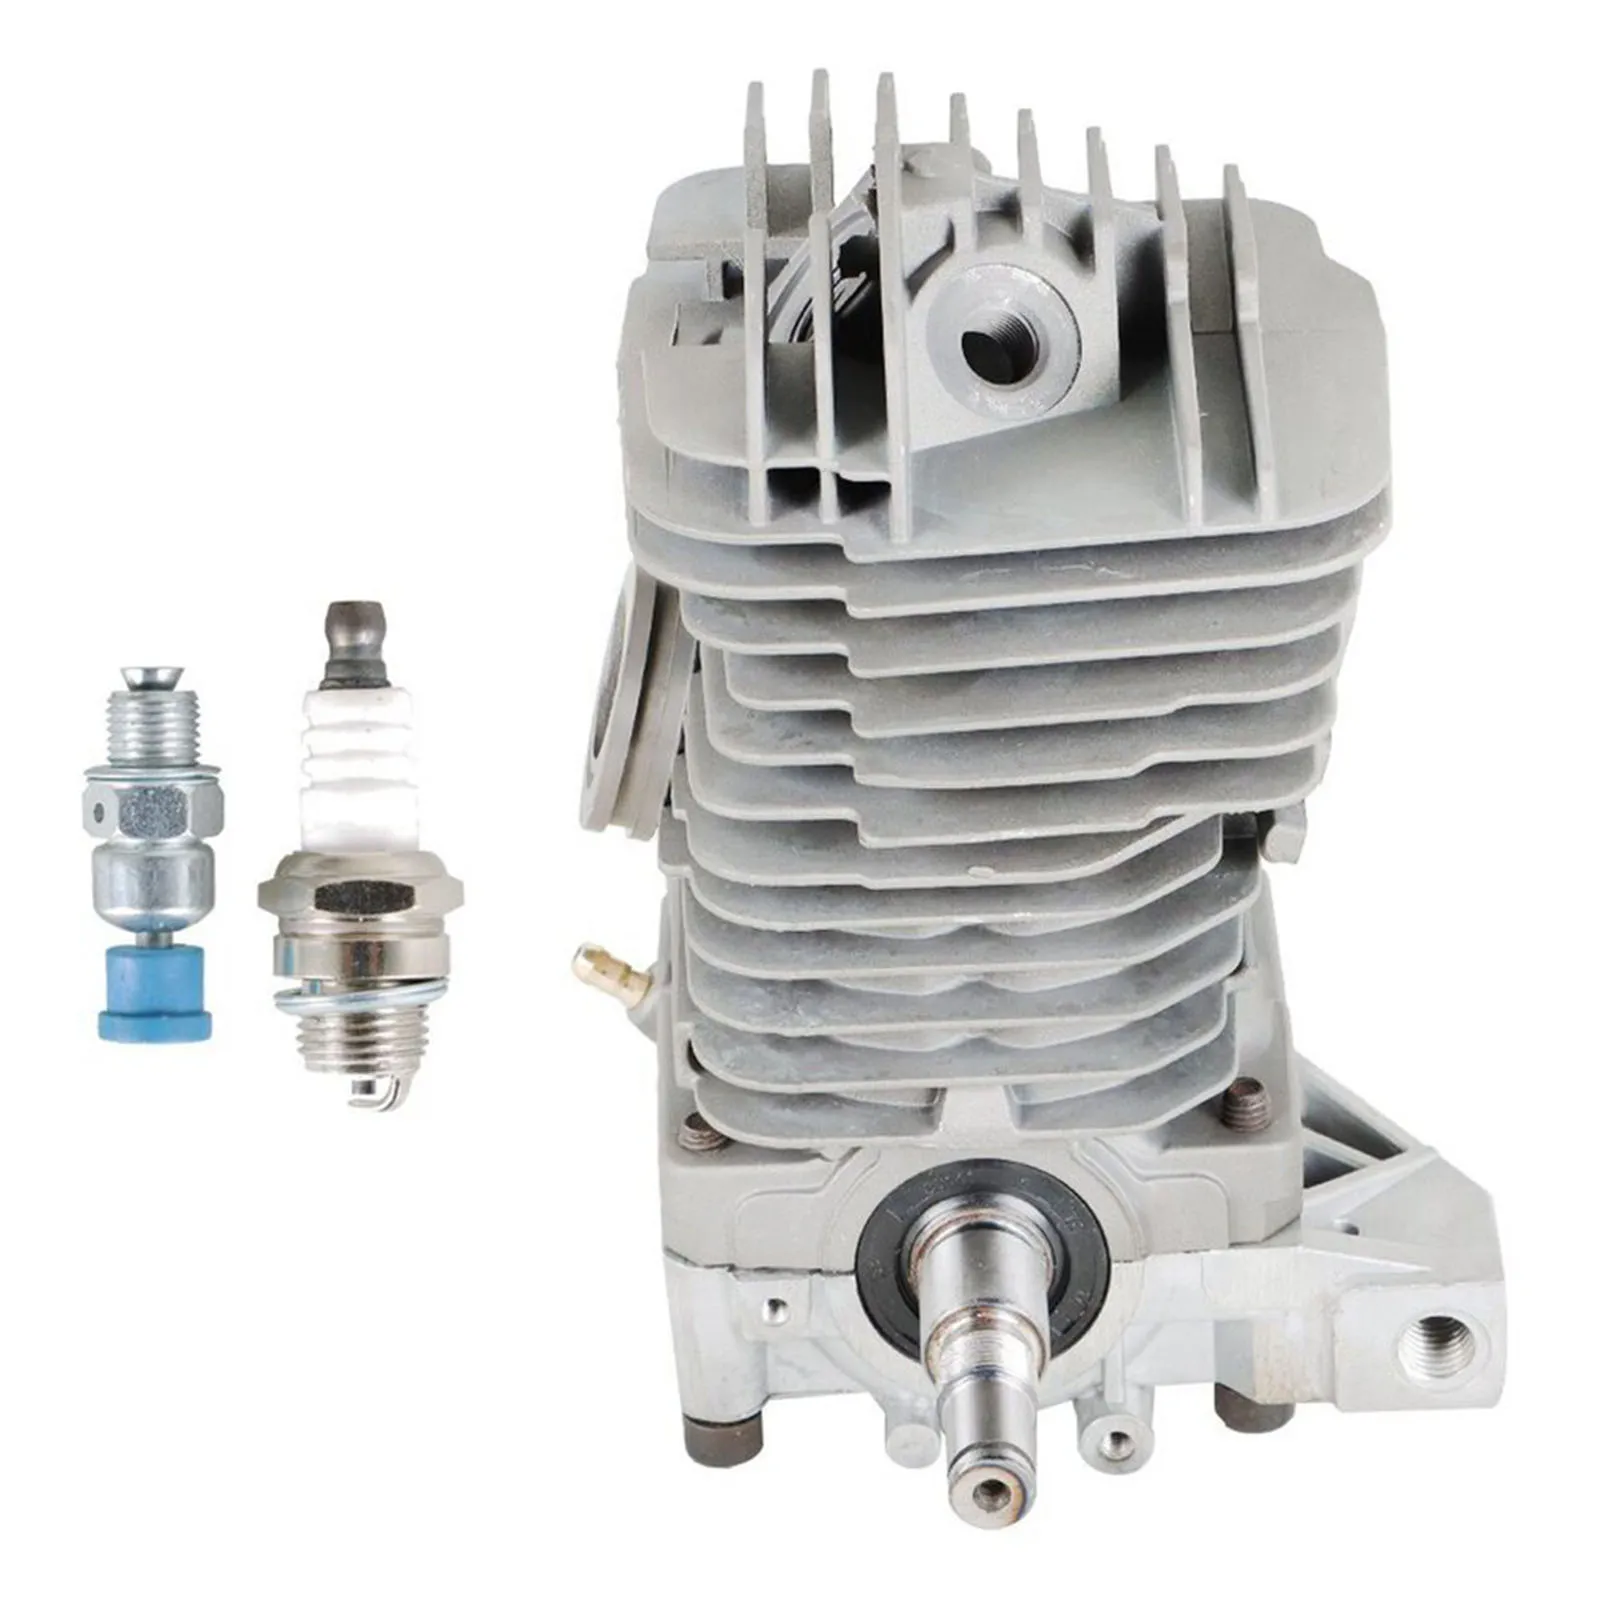 

MS390 49MM Cylinder Piston Crankshaft Engine Motor For STIHL MS290 MS310 029 039 Metal Engine Motor Kit Garden Power Tool Parts